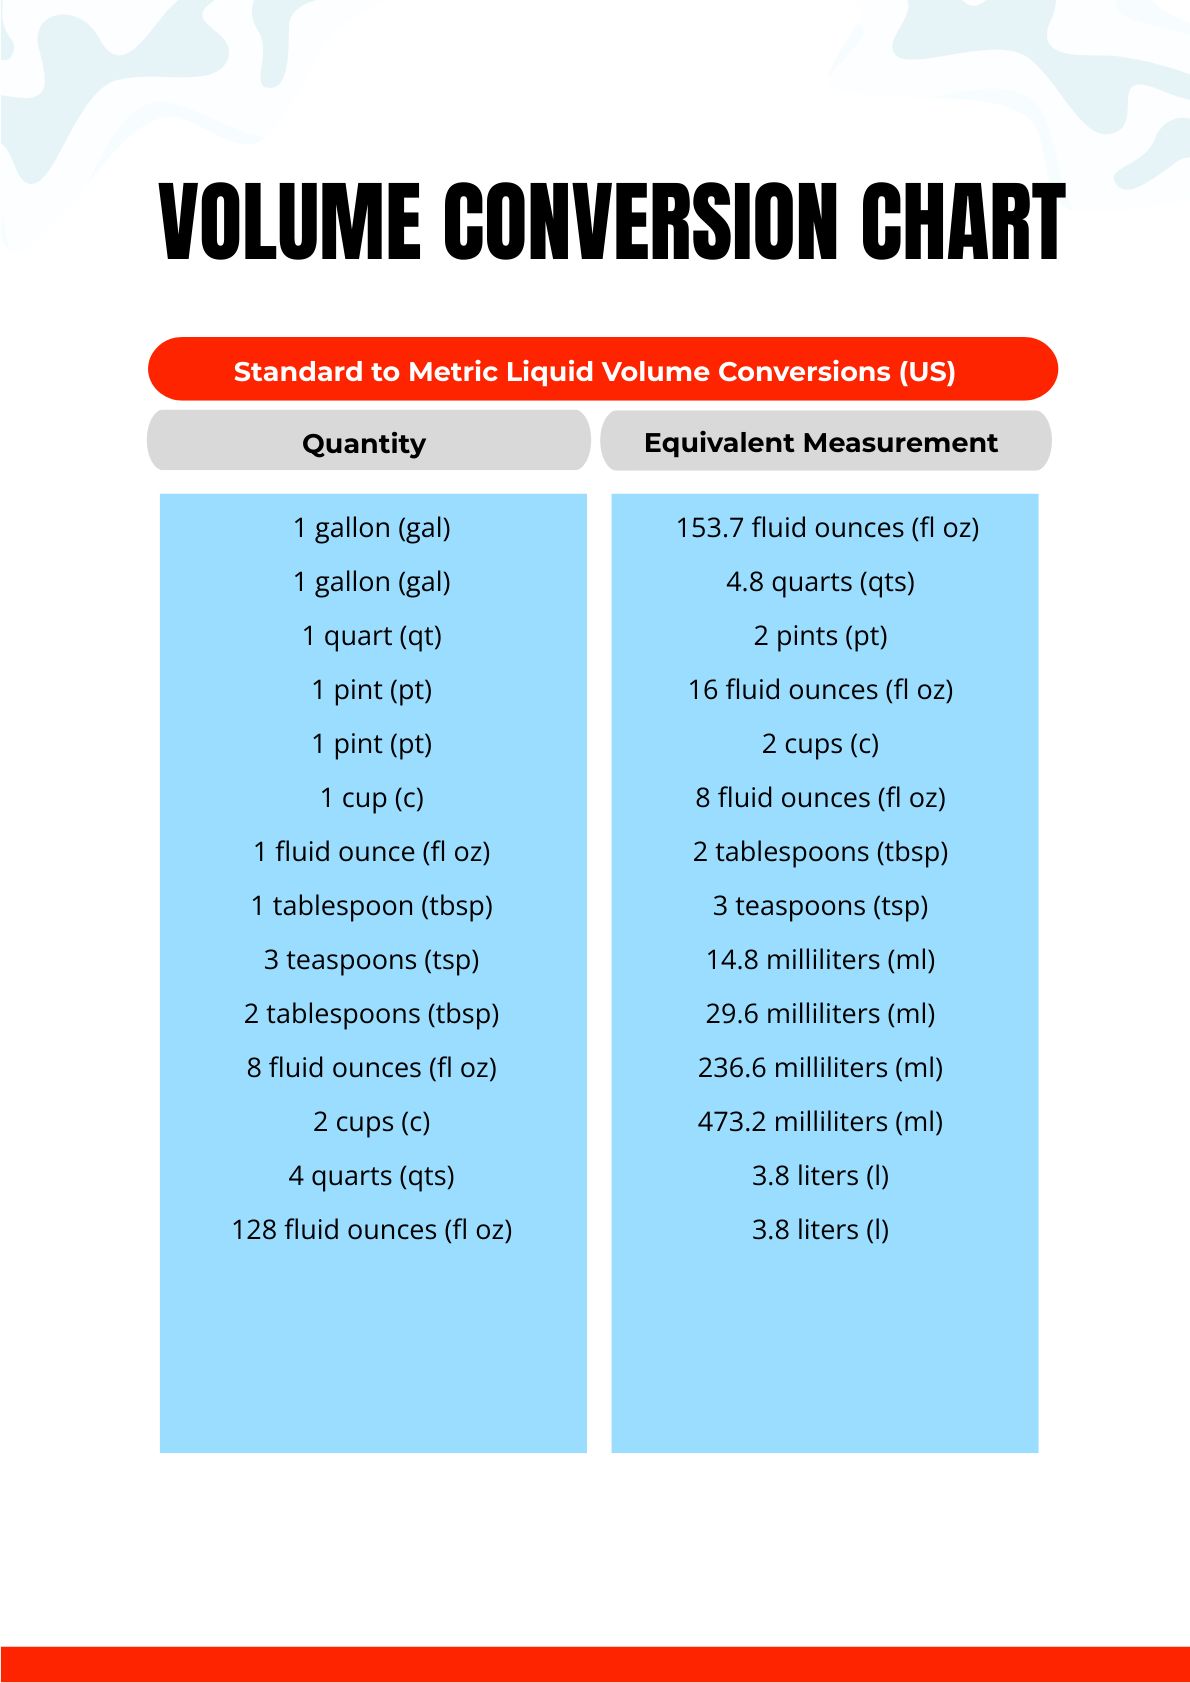 Volume Conversion Chart in PDF, Illustrator